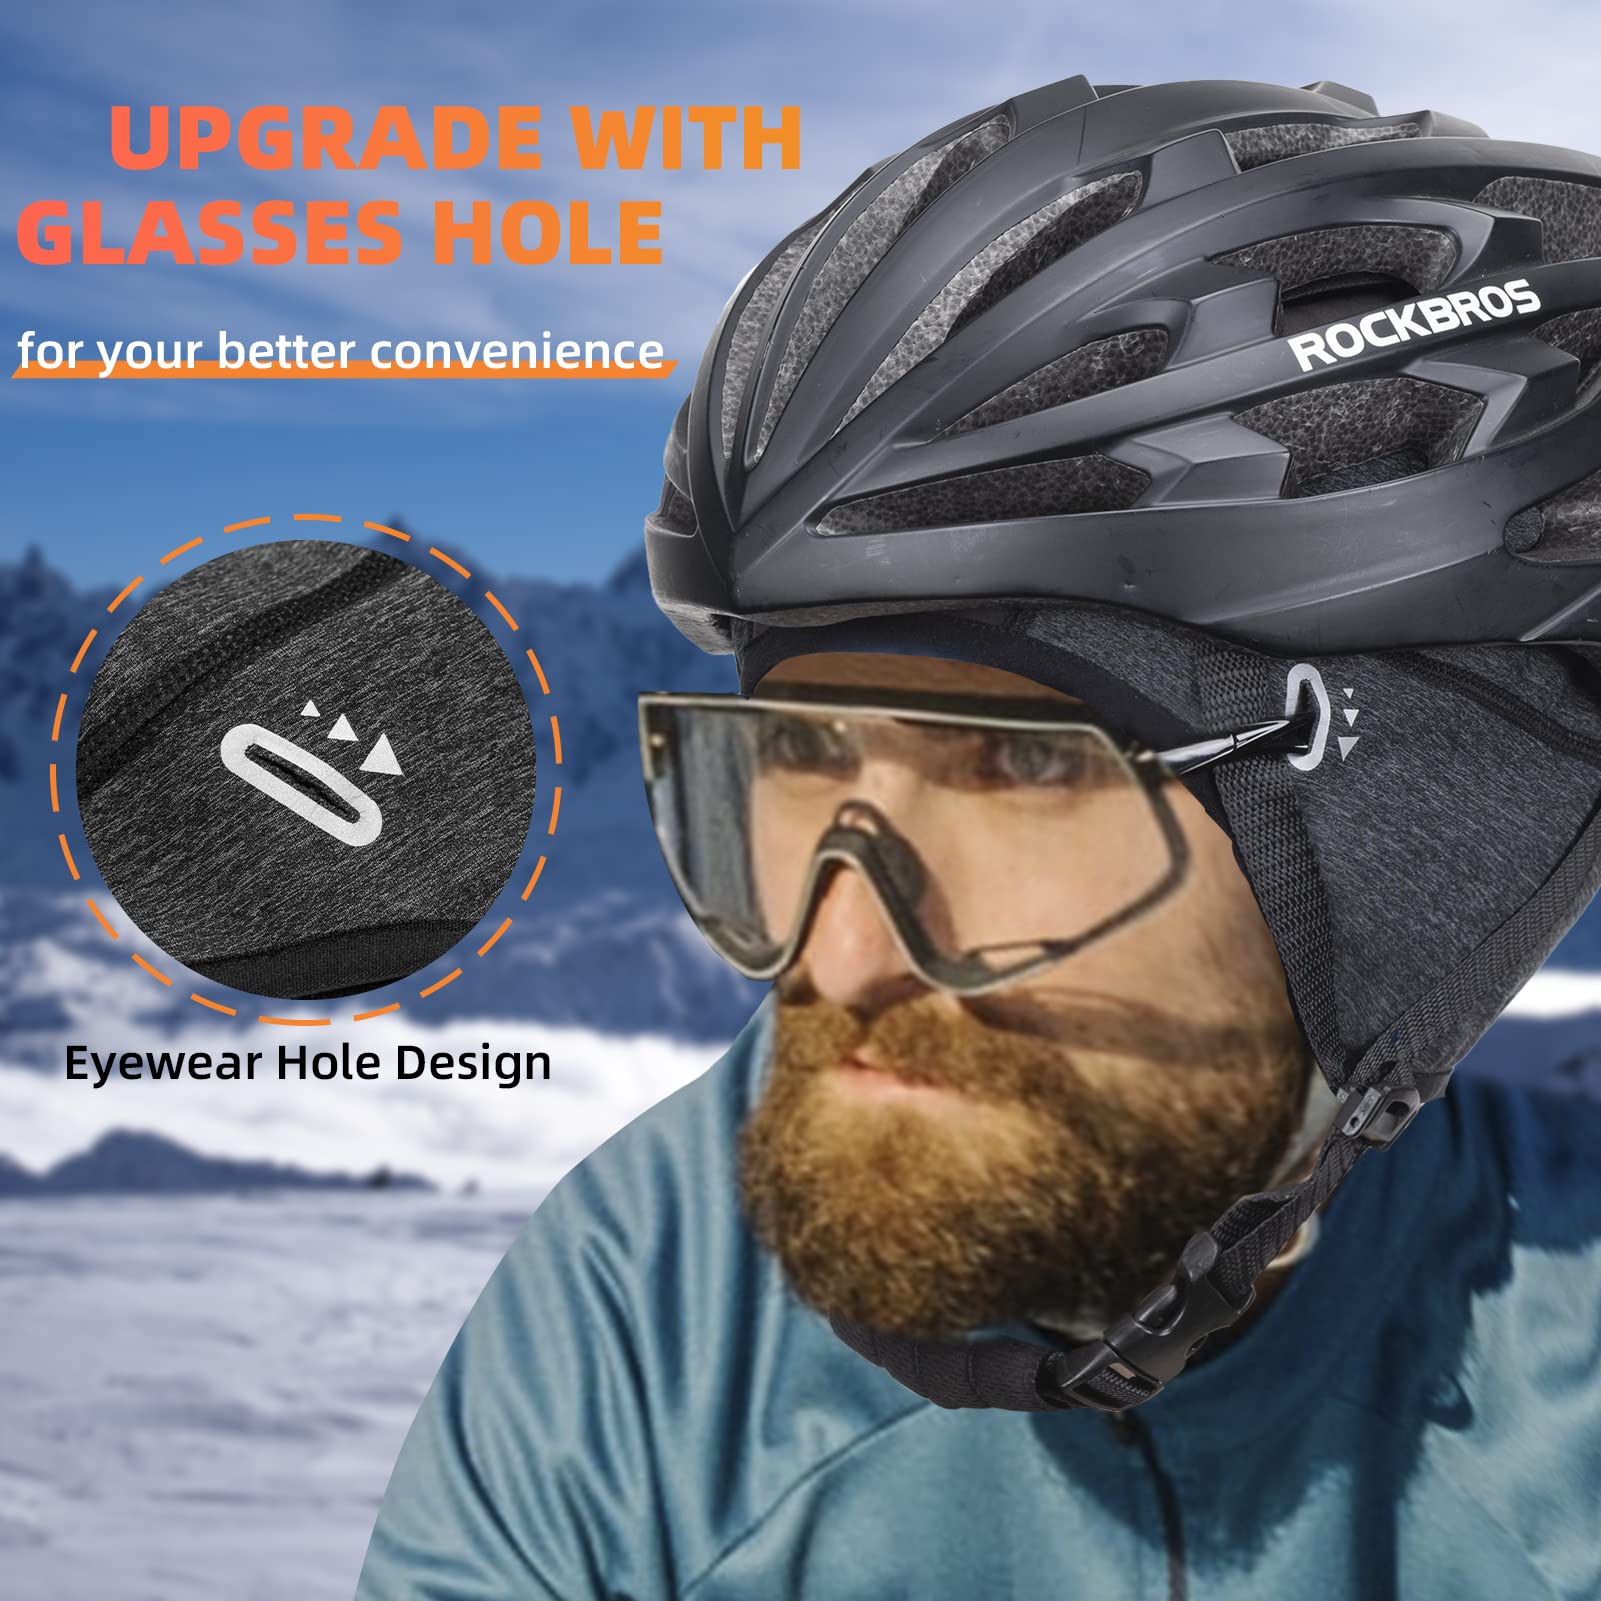 ROCKBROS Cycling Cap Under Helmet with Sunglasses Holes